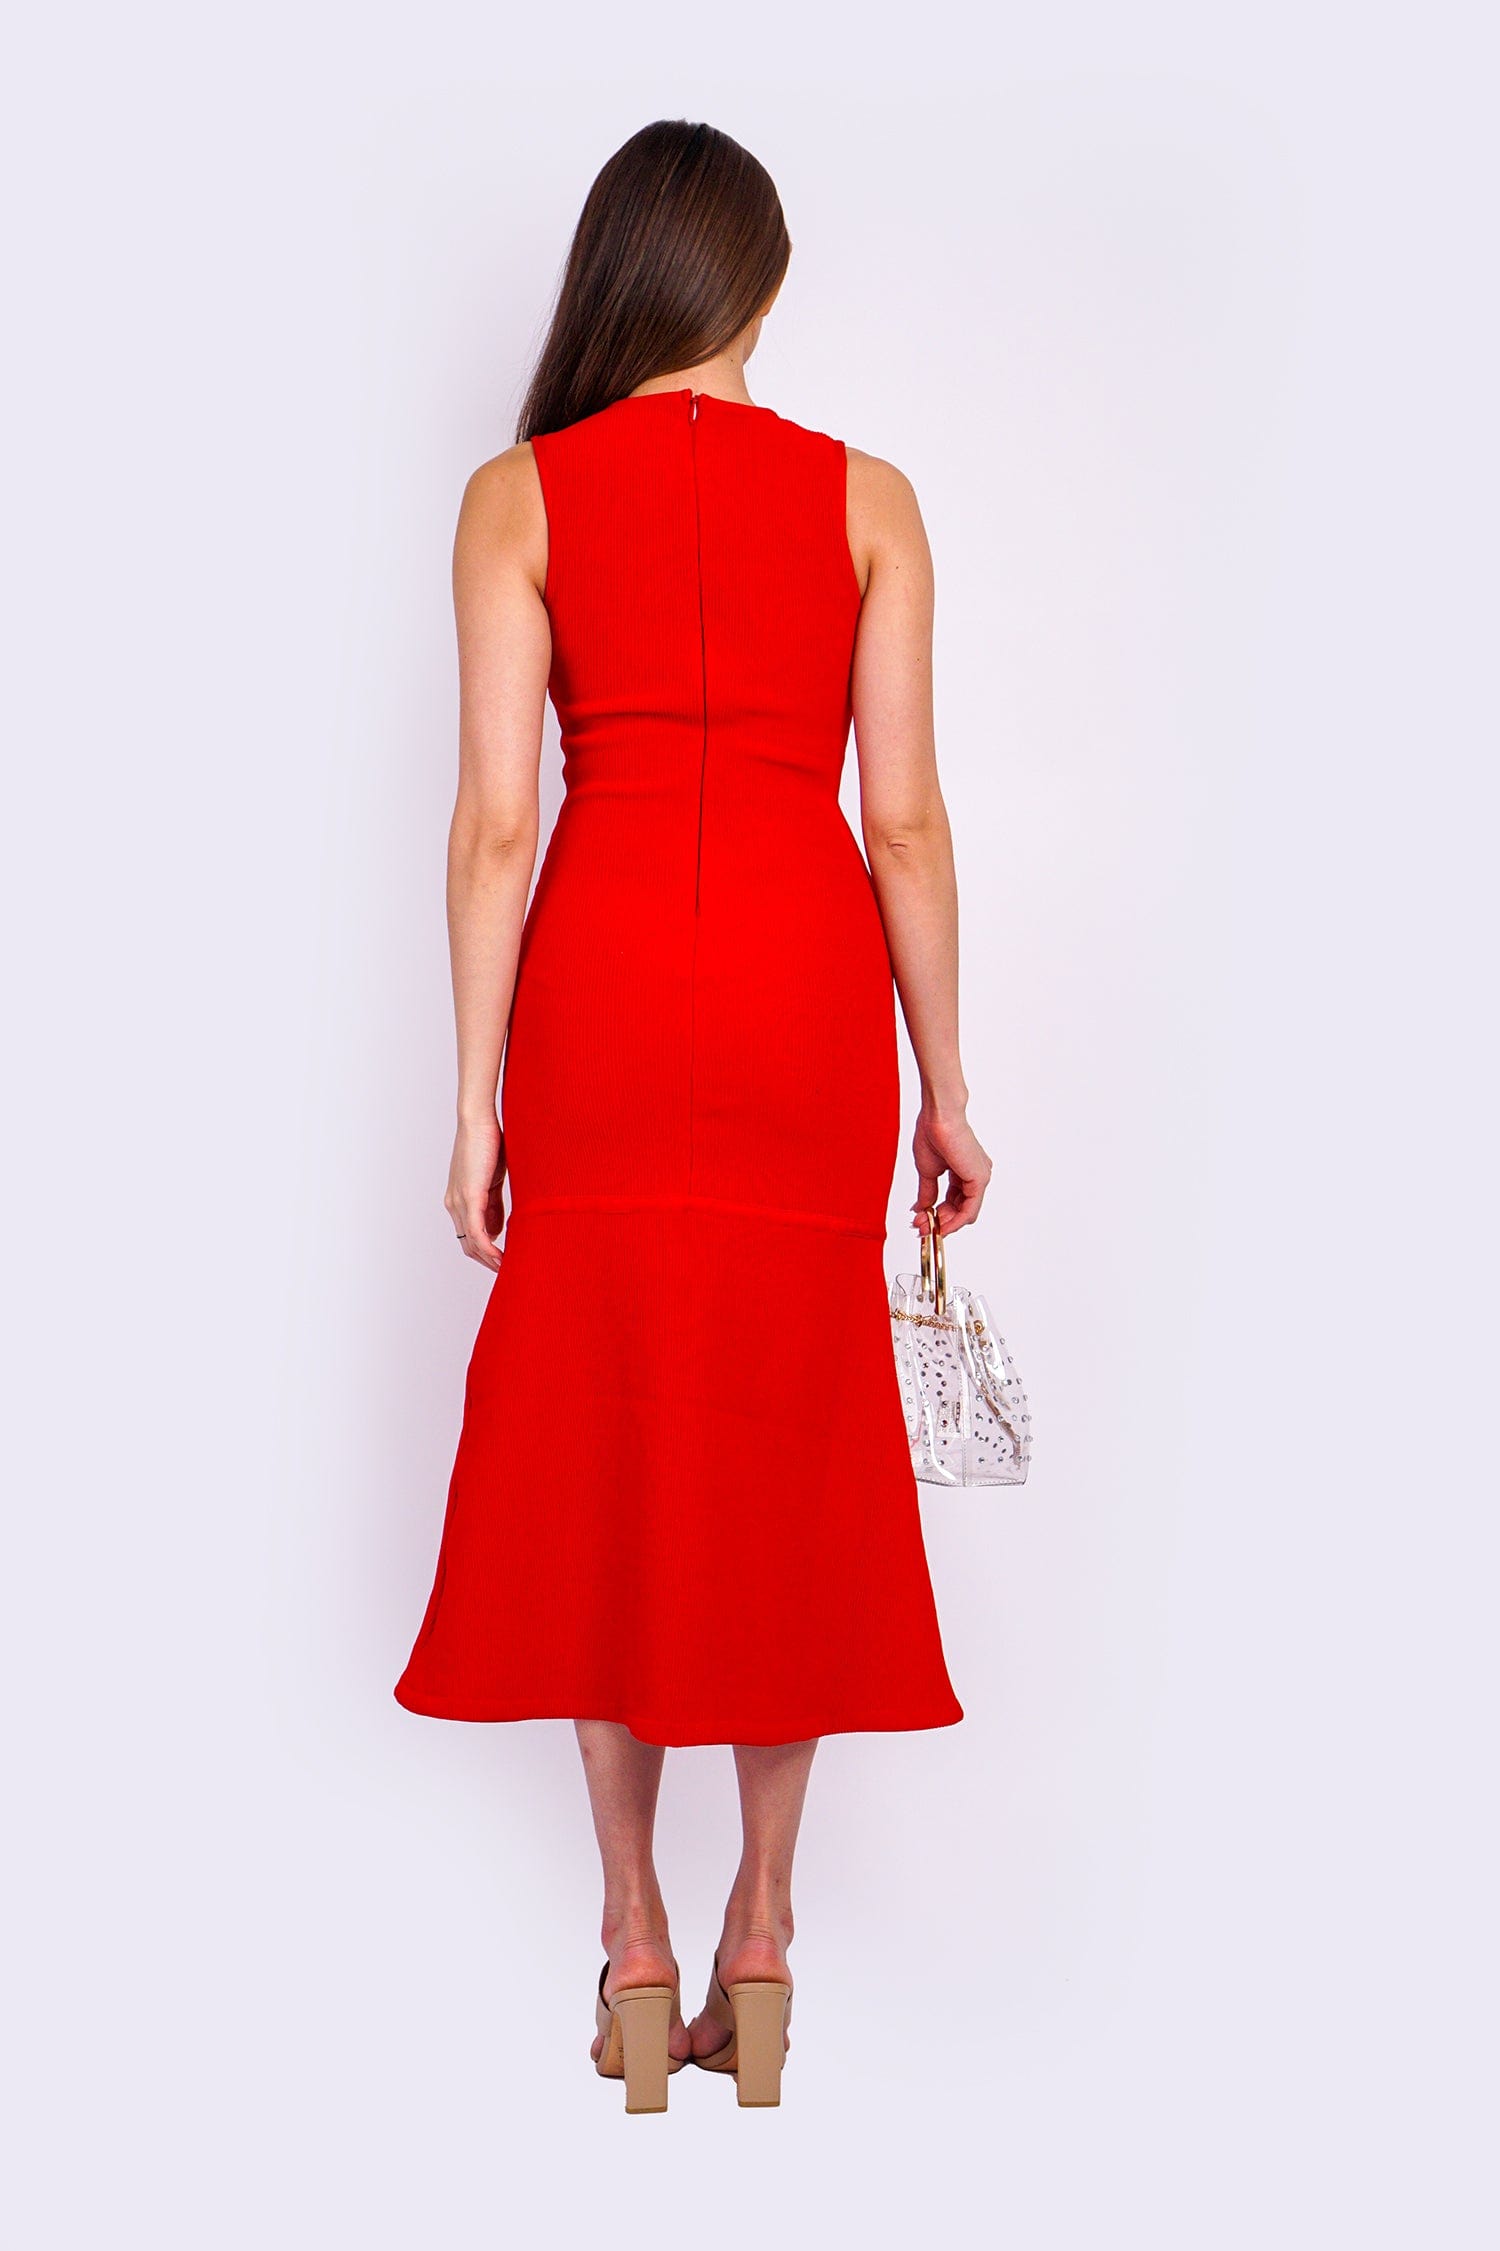 DCD DRESSES Red Grommet Lace Up Knit Dress